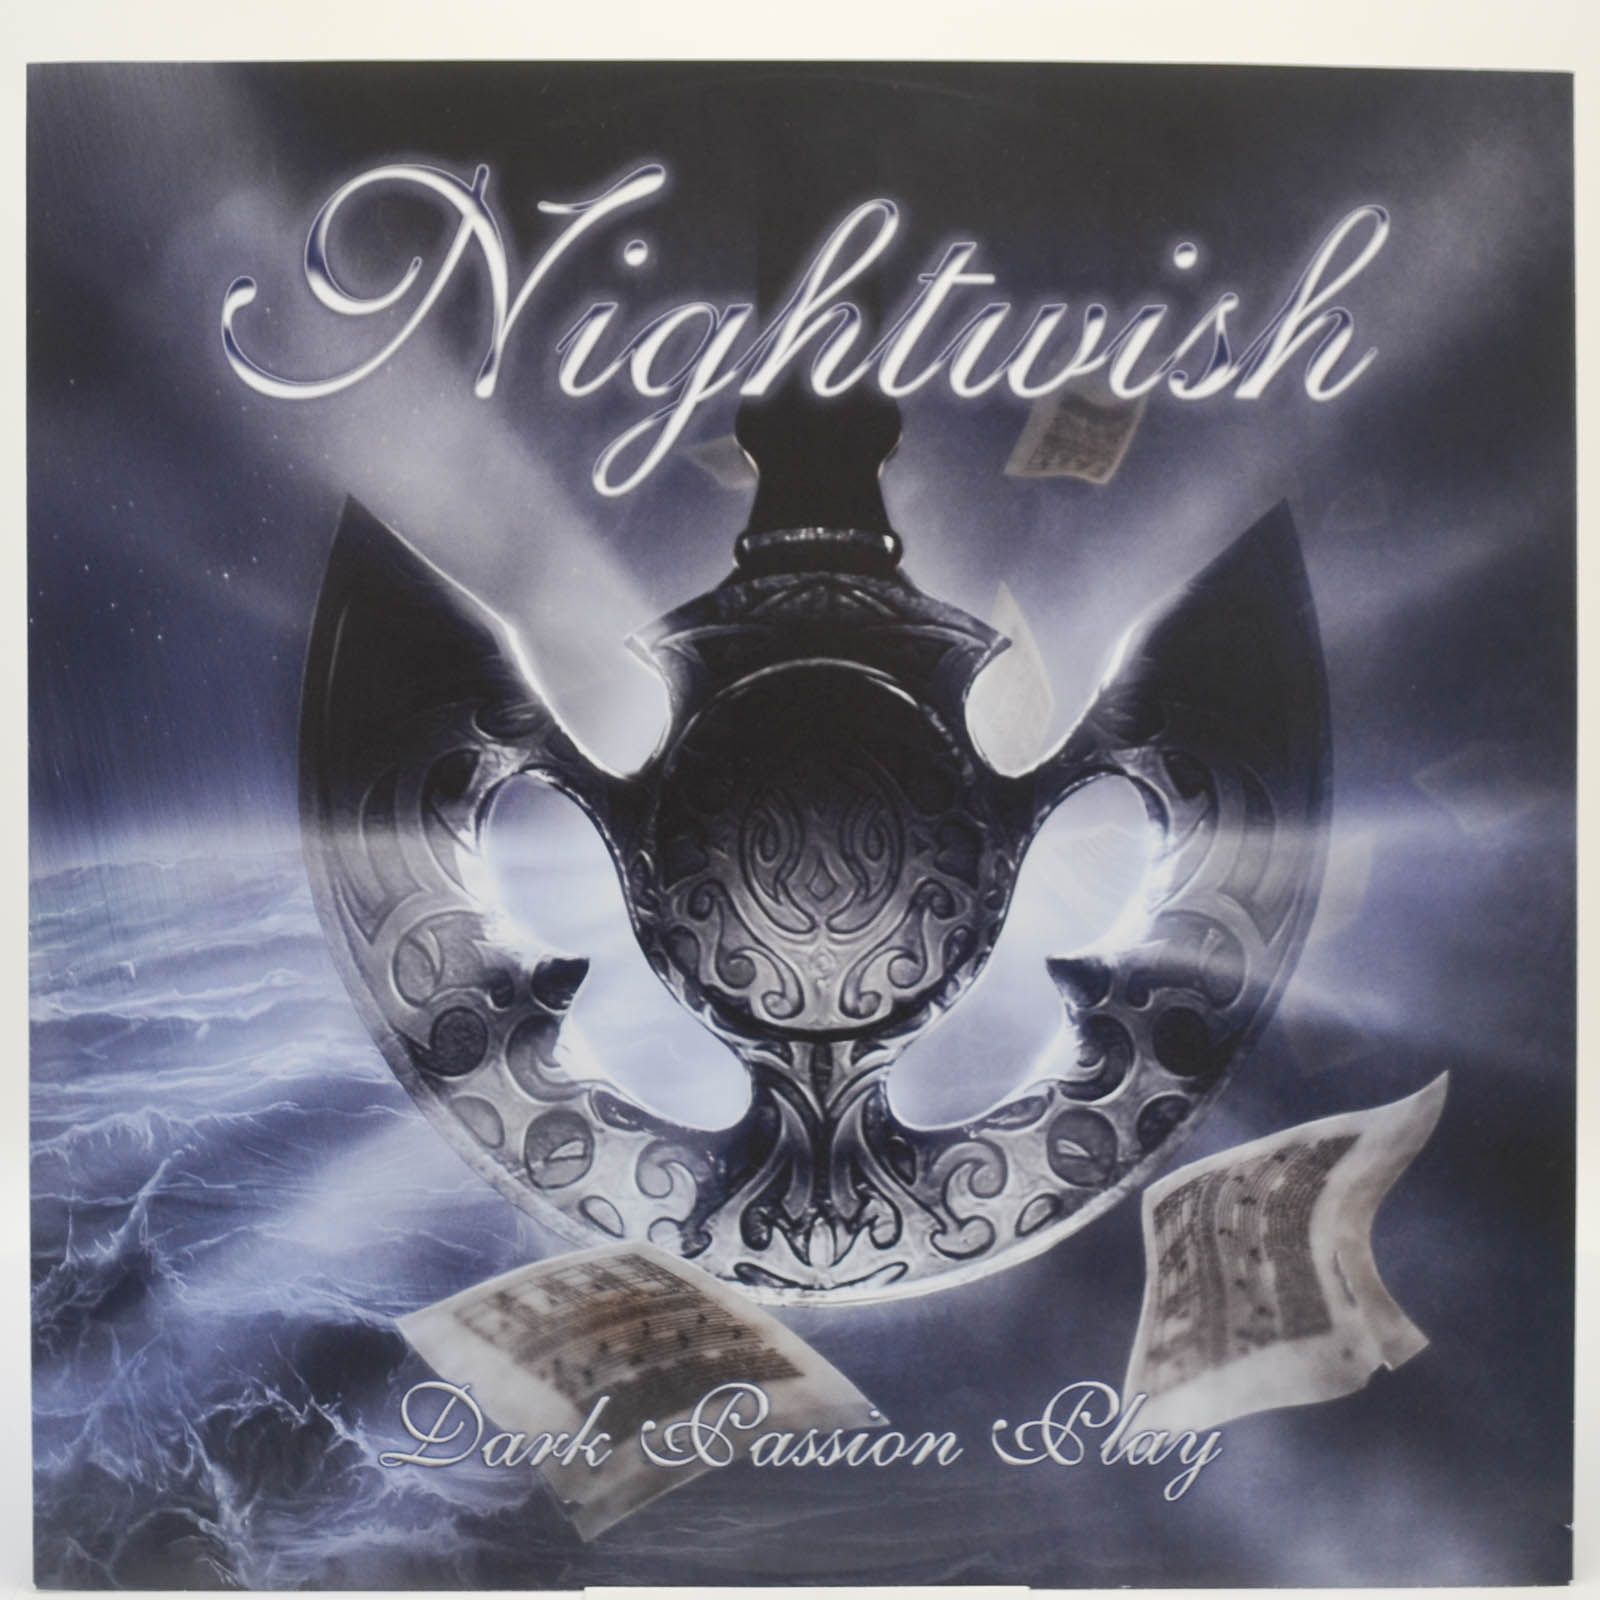 Nightwish — Dark Passion Play (2LP), 2007